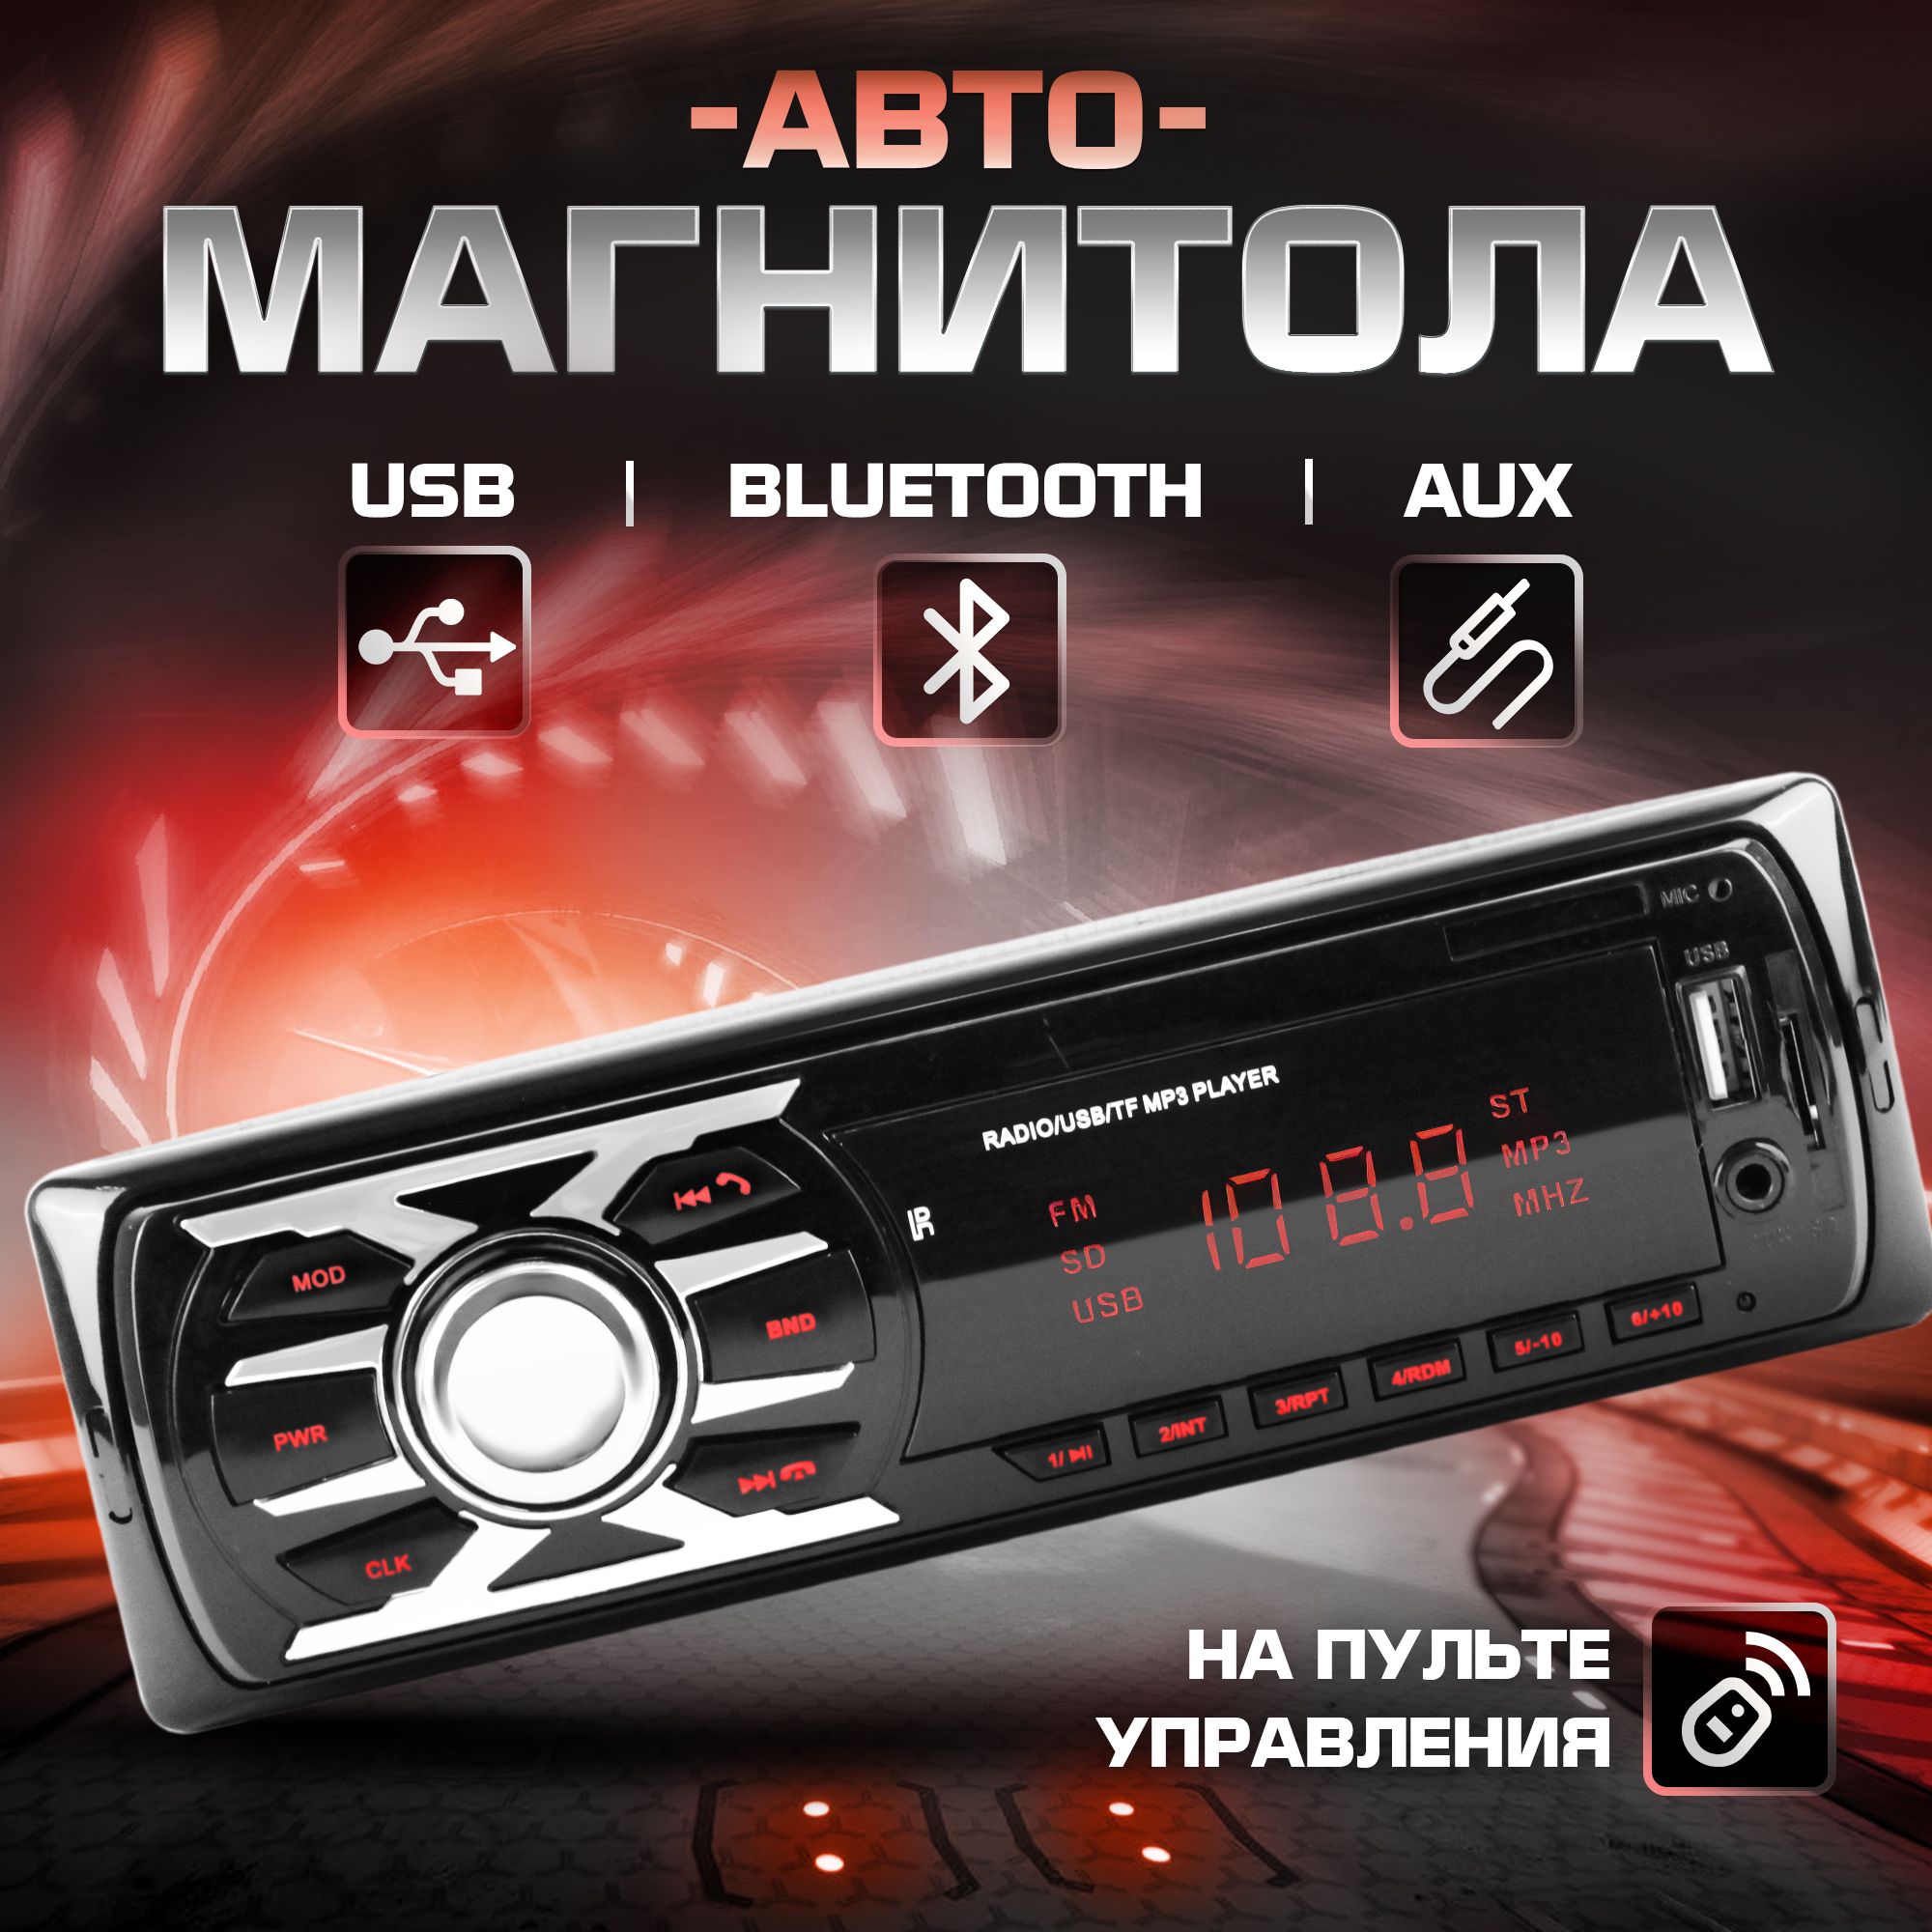 АвтомагнитолаTakaraA707FM,USB,AUX,Bluetooth+пультуправления